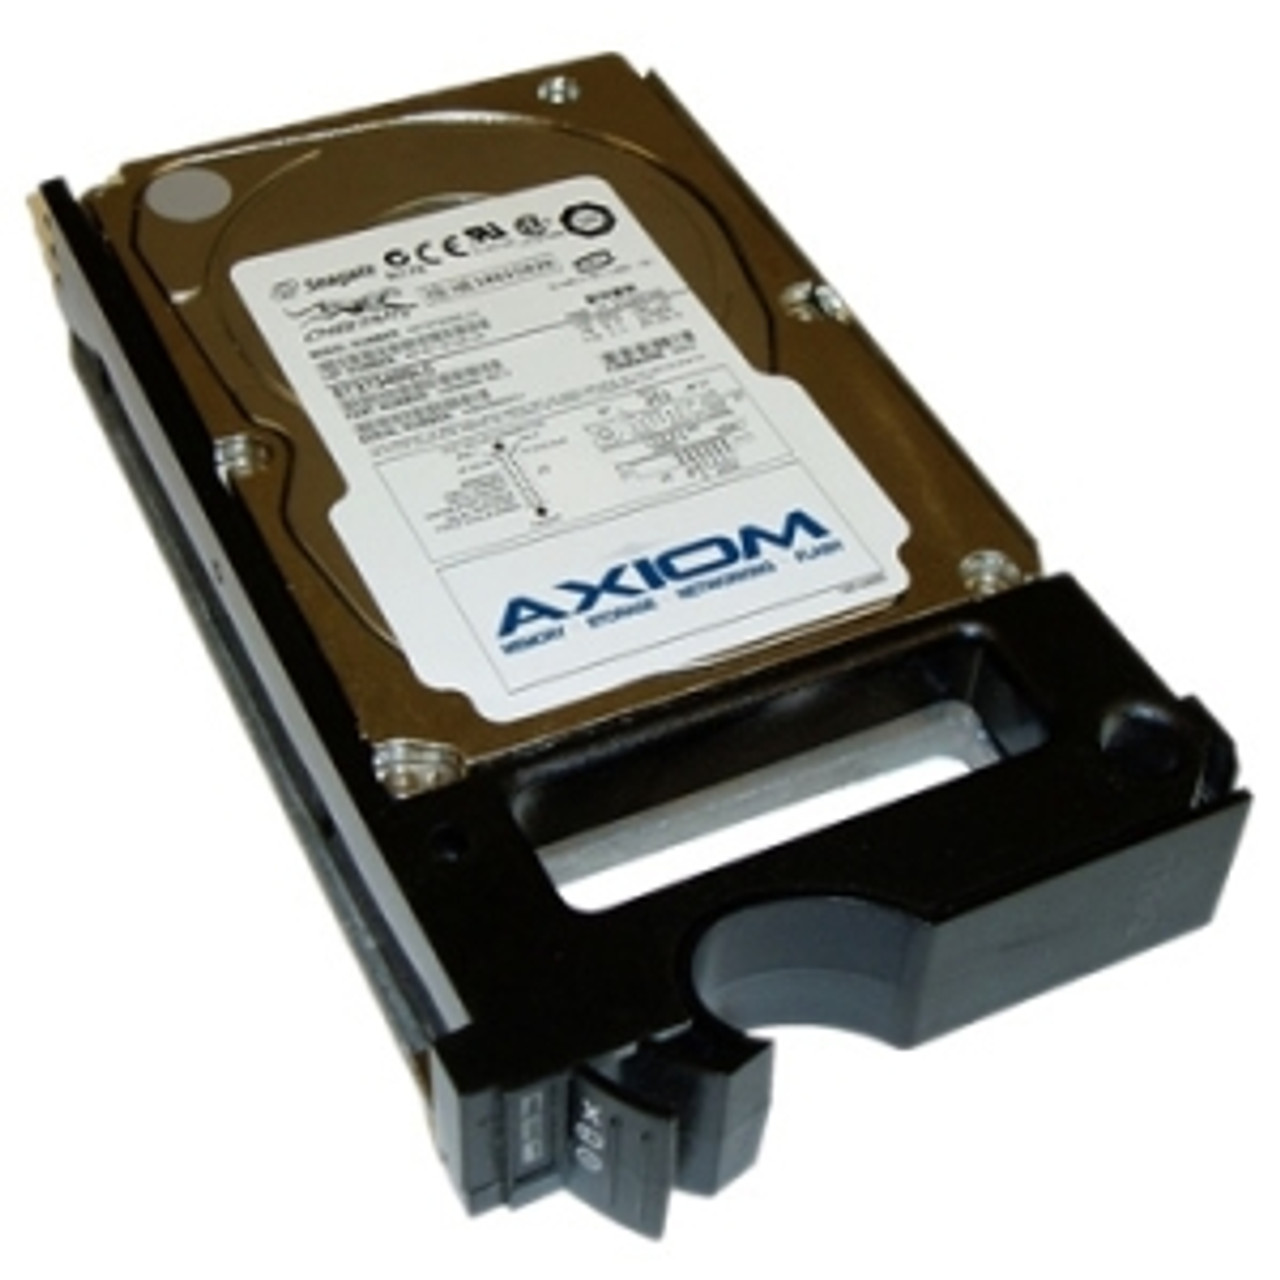 42D0782-AXA - Axiom 42D0782-AXA 2 TB 3.5 Internal Hard Drive - OEM - SATA/300 - 7200 rpm - Hot Swappable